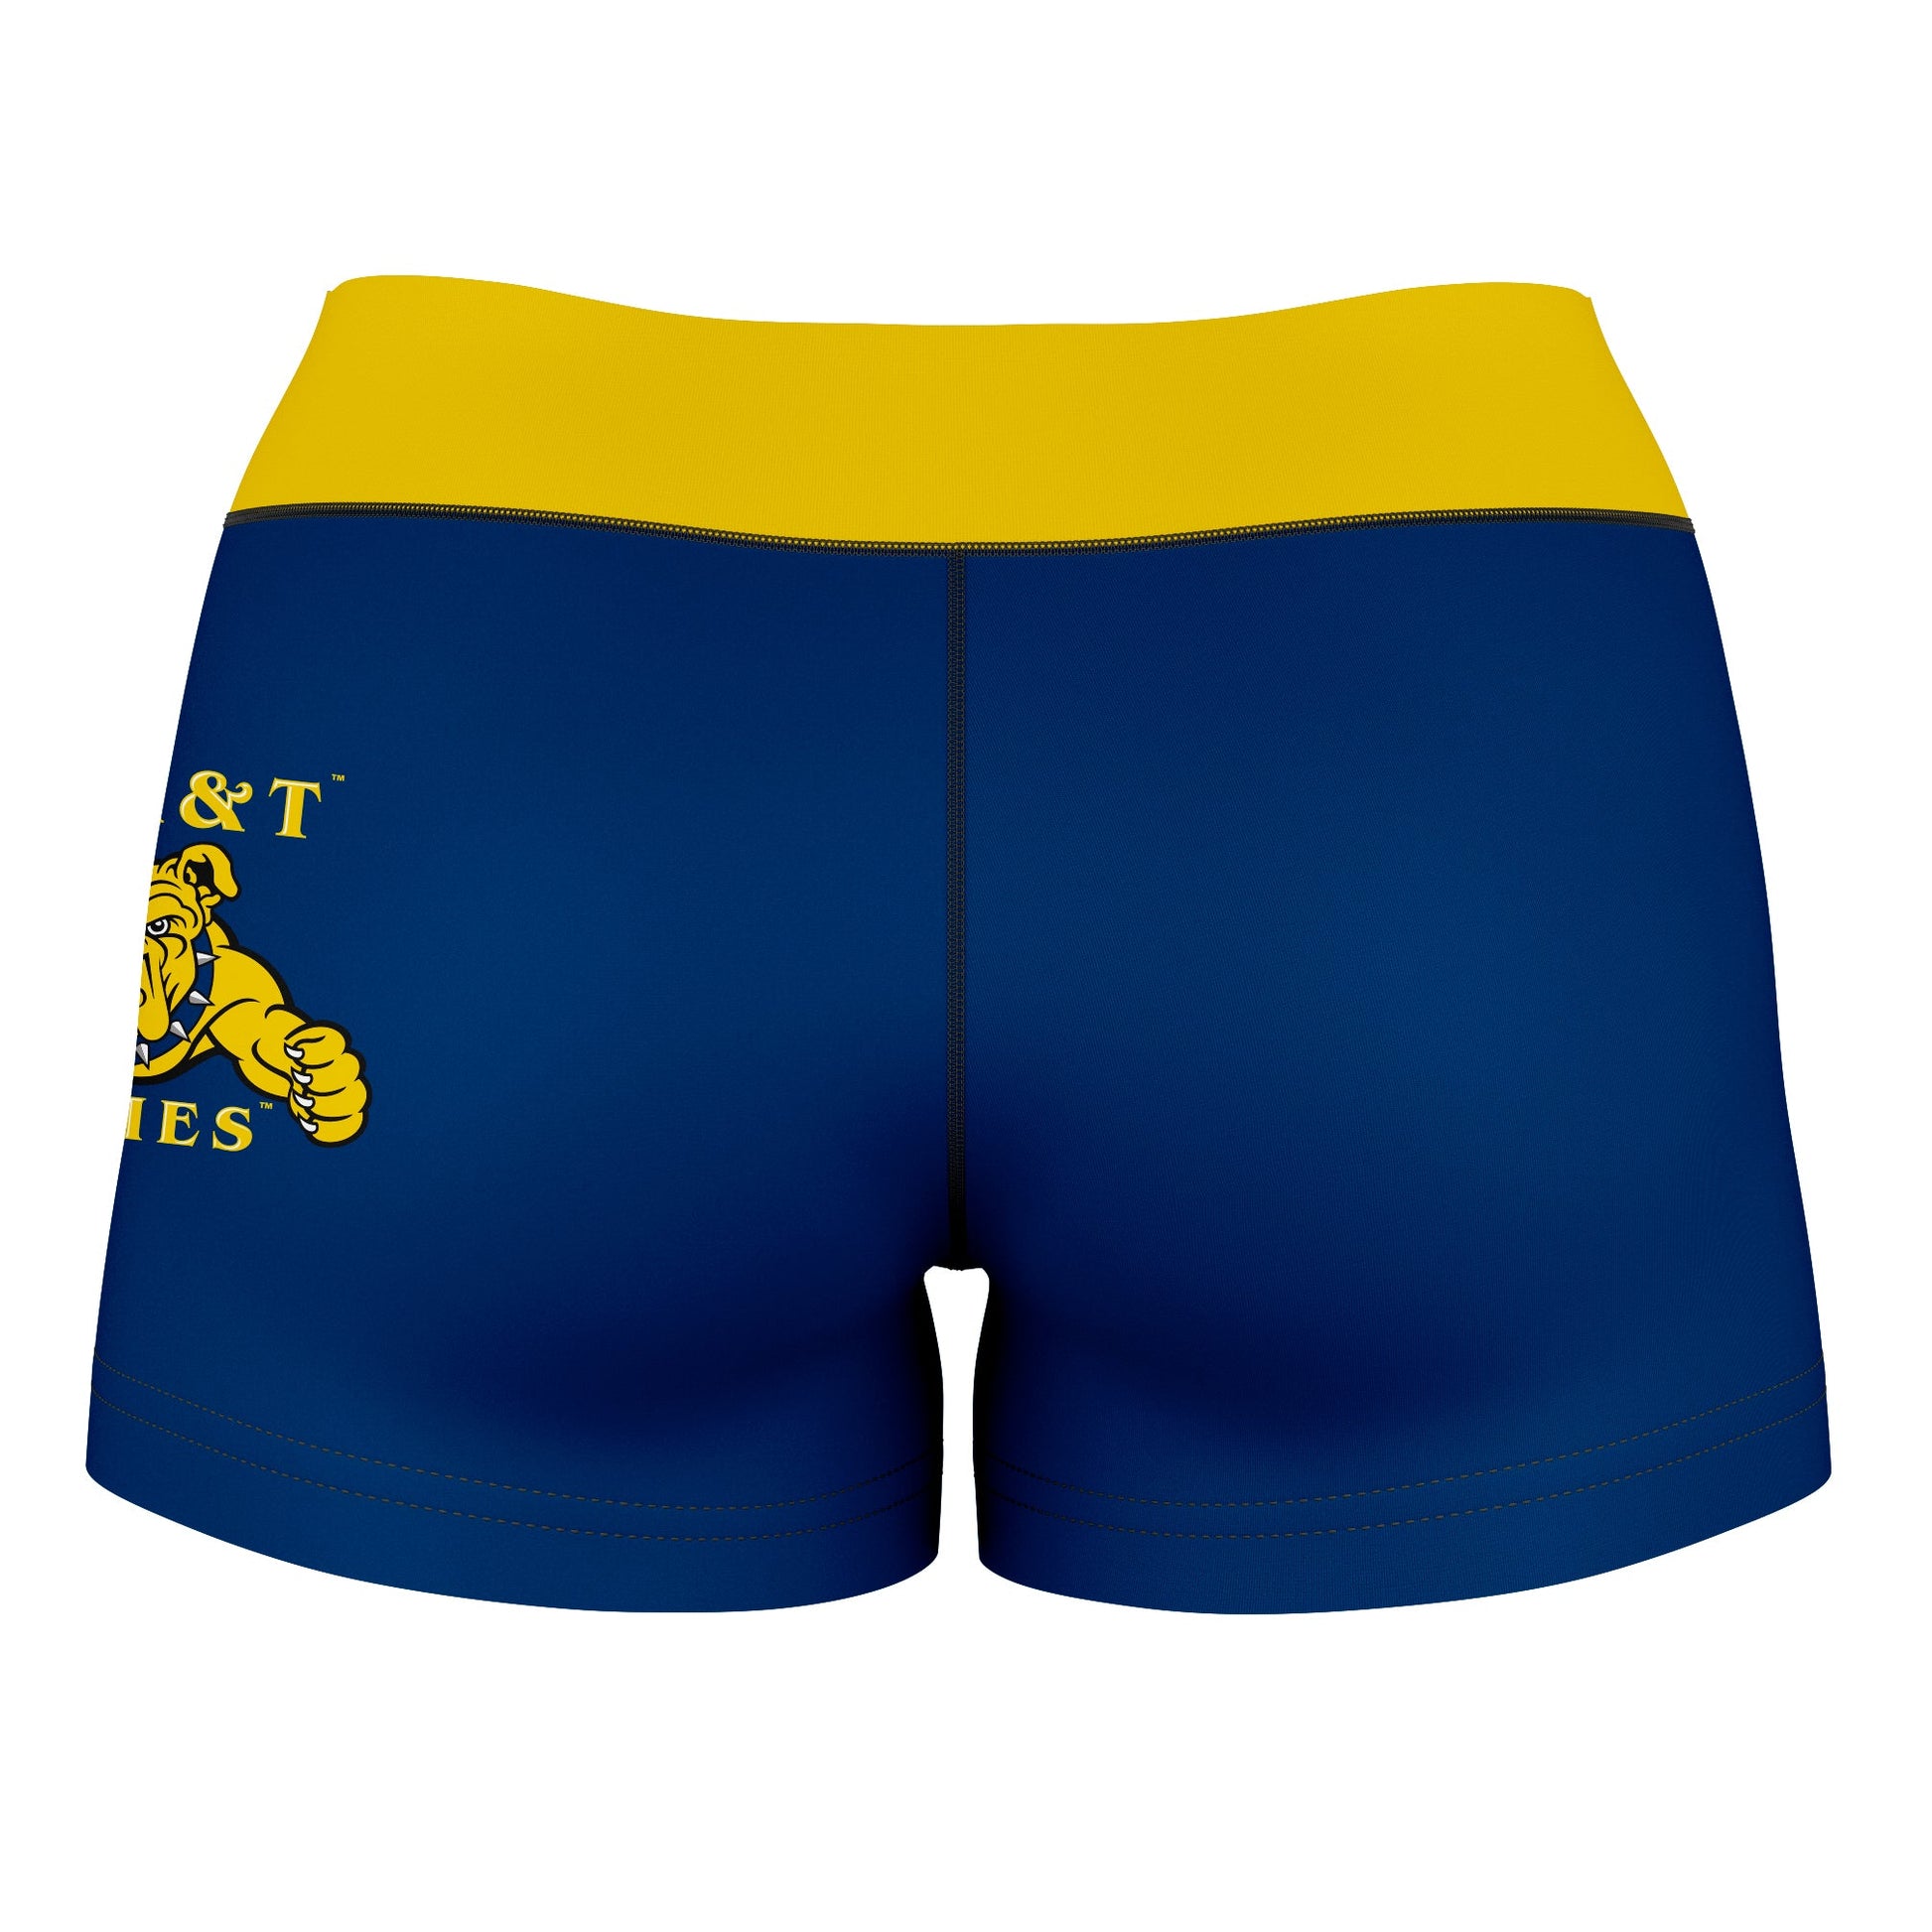 North Carolina A&T Aggies Vive La Fete Logo on Thigh & Waistband Blue Gold Women Yoga Booty Workout Shorts 3.75 Inseam - Vive La F̻te - Online Apparel Store